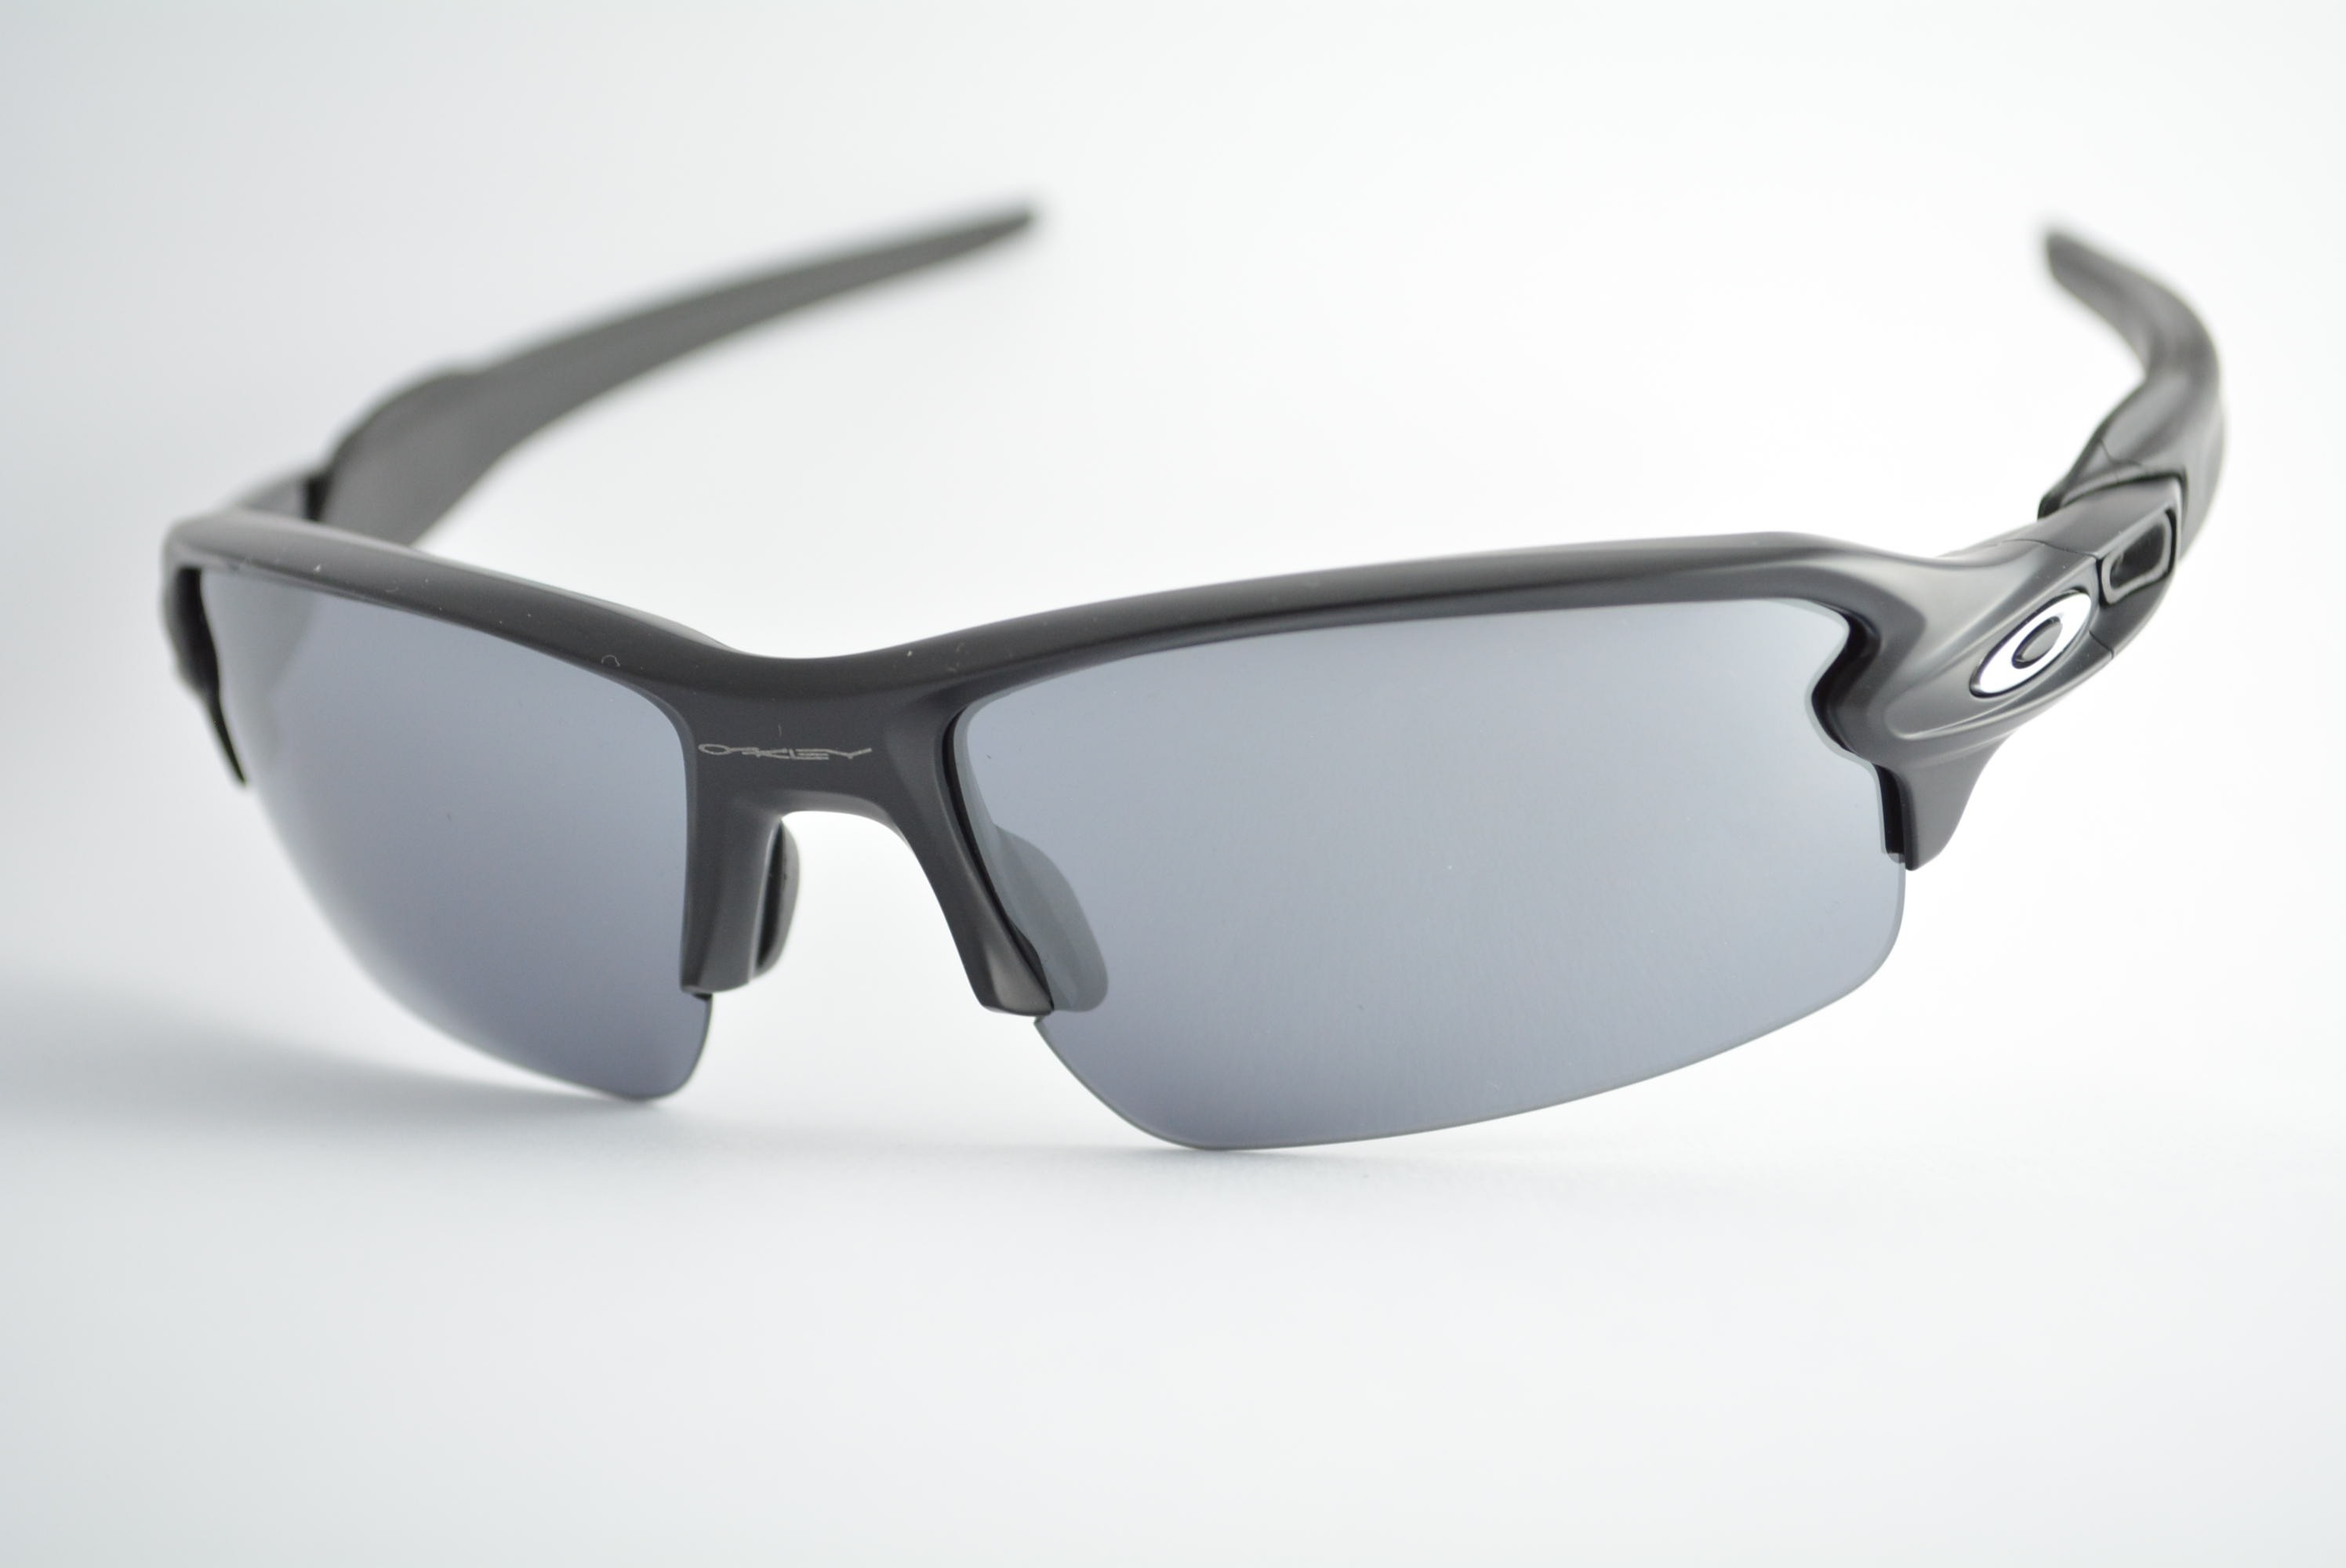 Oculos Oakley Flak 2.0 - R$ 119,00 em Mercado Livre